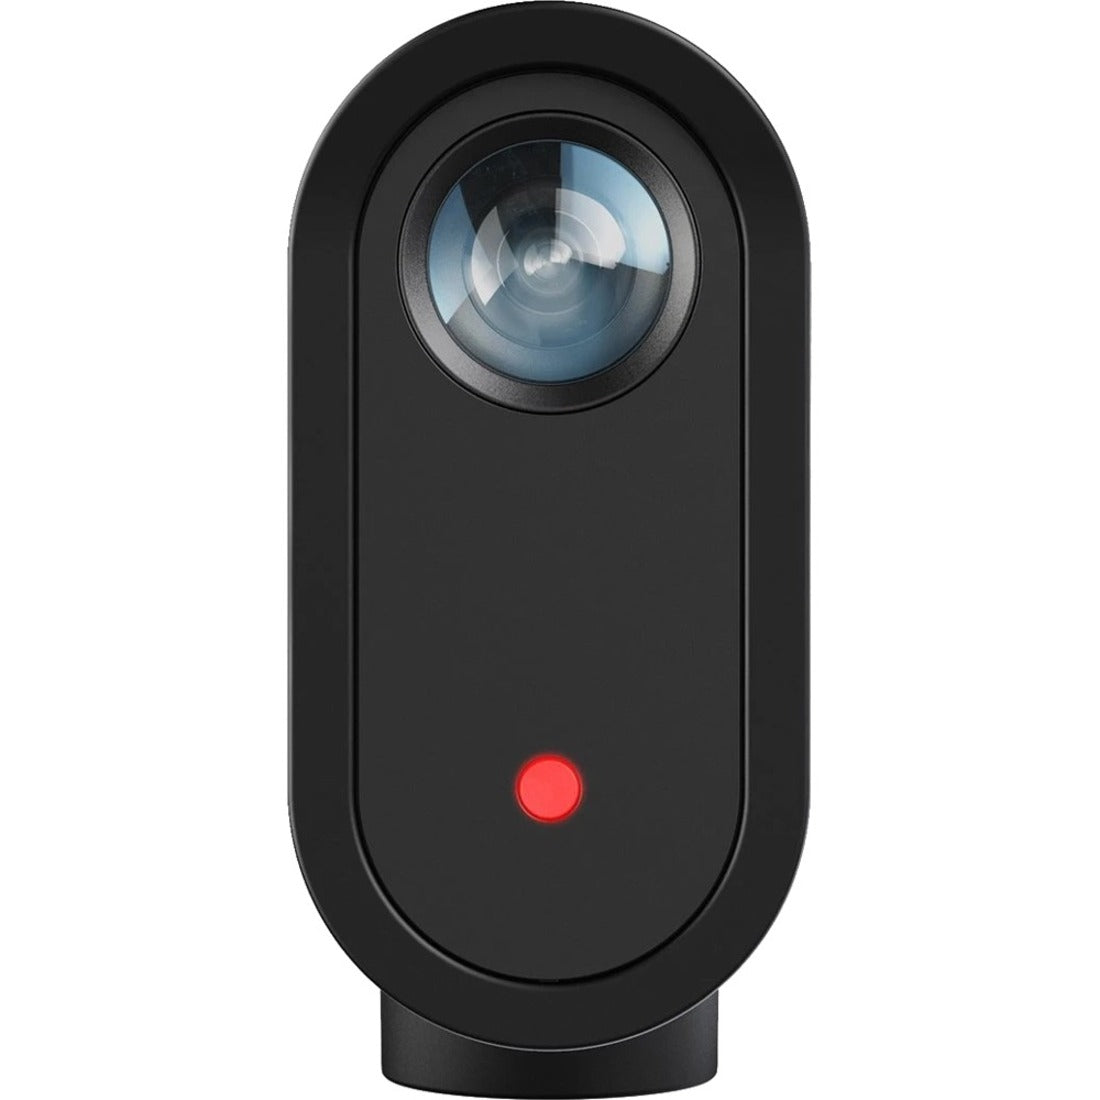 Mevo 961-000500 Start Camera, 3 Pack - Full HD Video Conferencing Camera